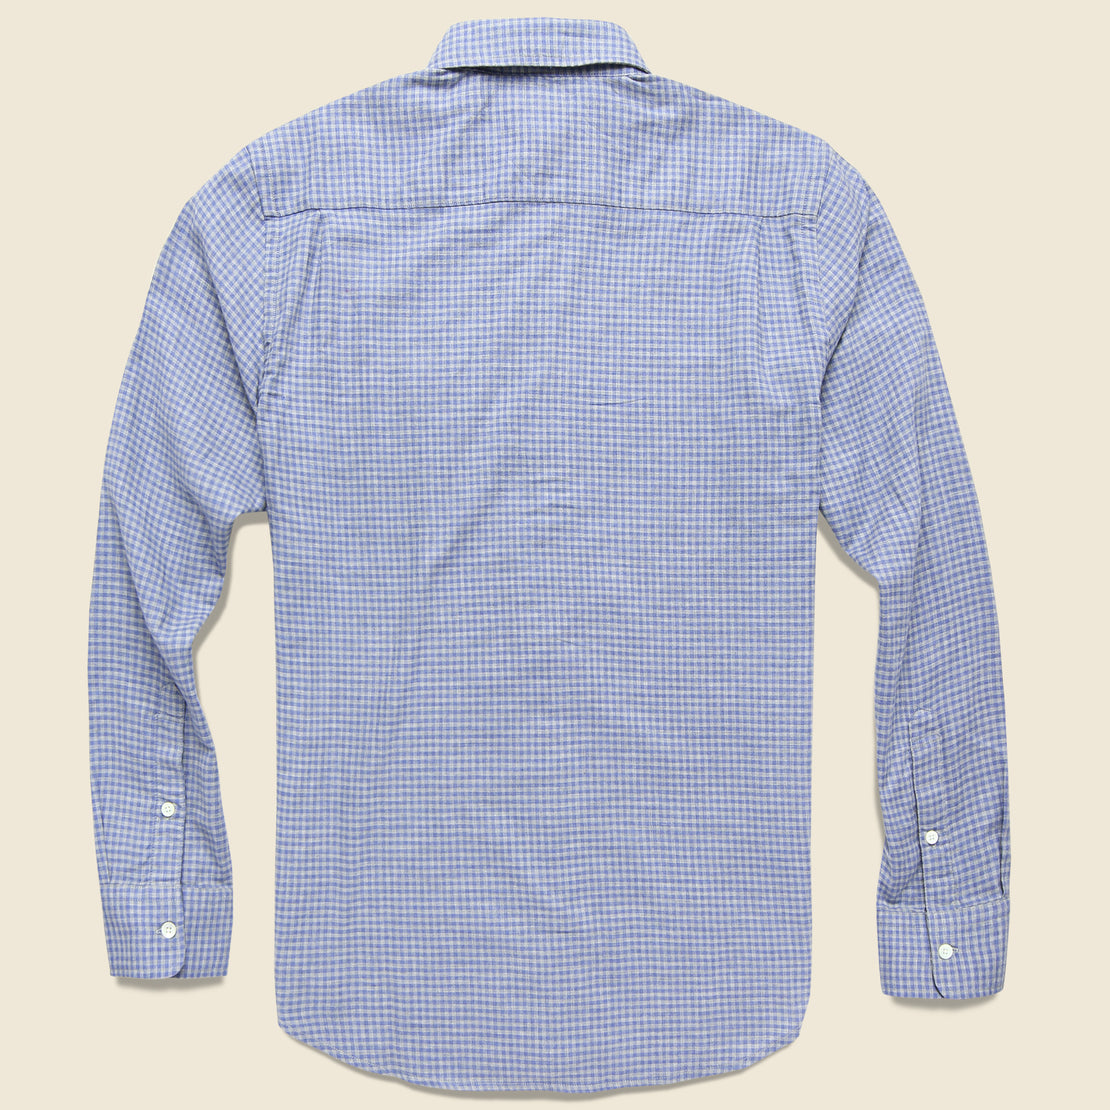 Pacific Shirt - Blue Grey Gingham